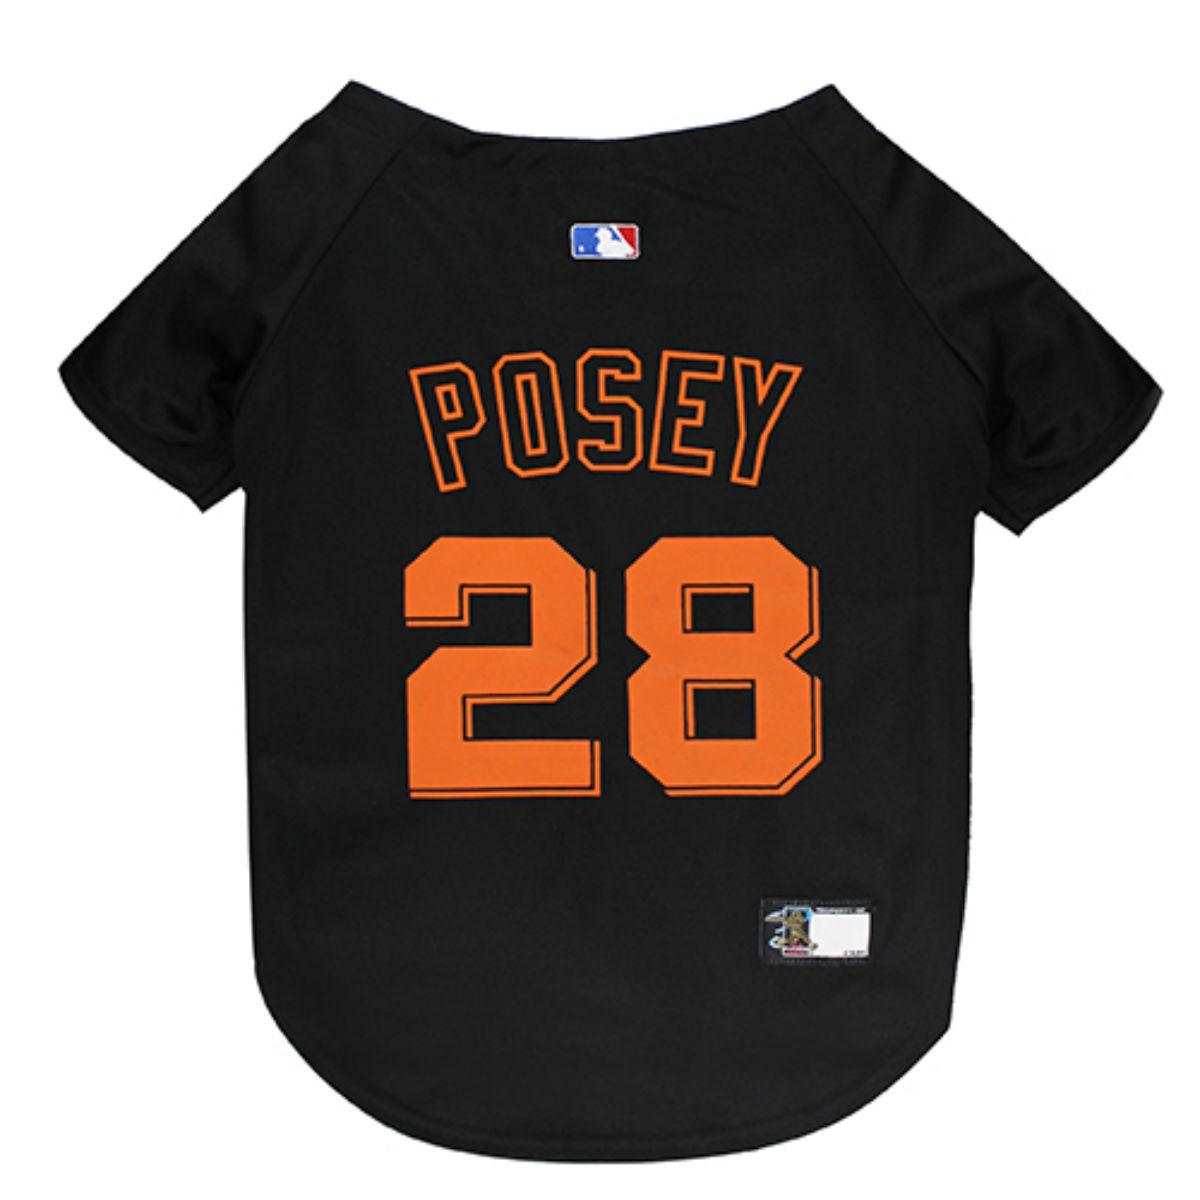 San Francisco Giants Buster Posey Dog Jersey - Black